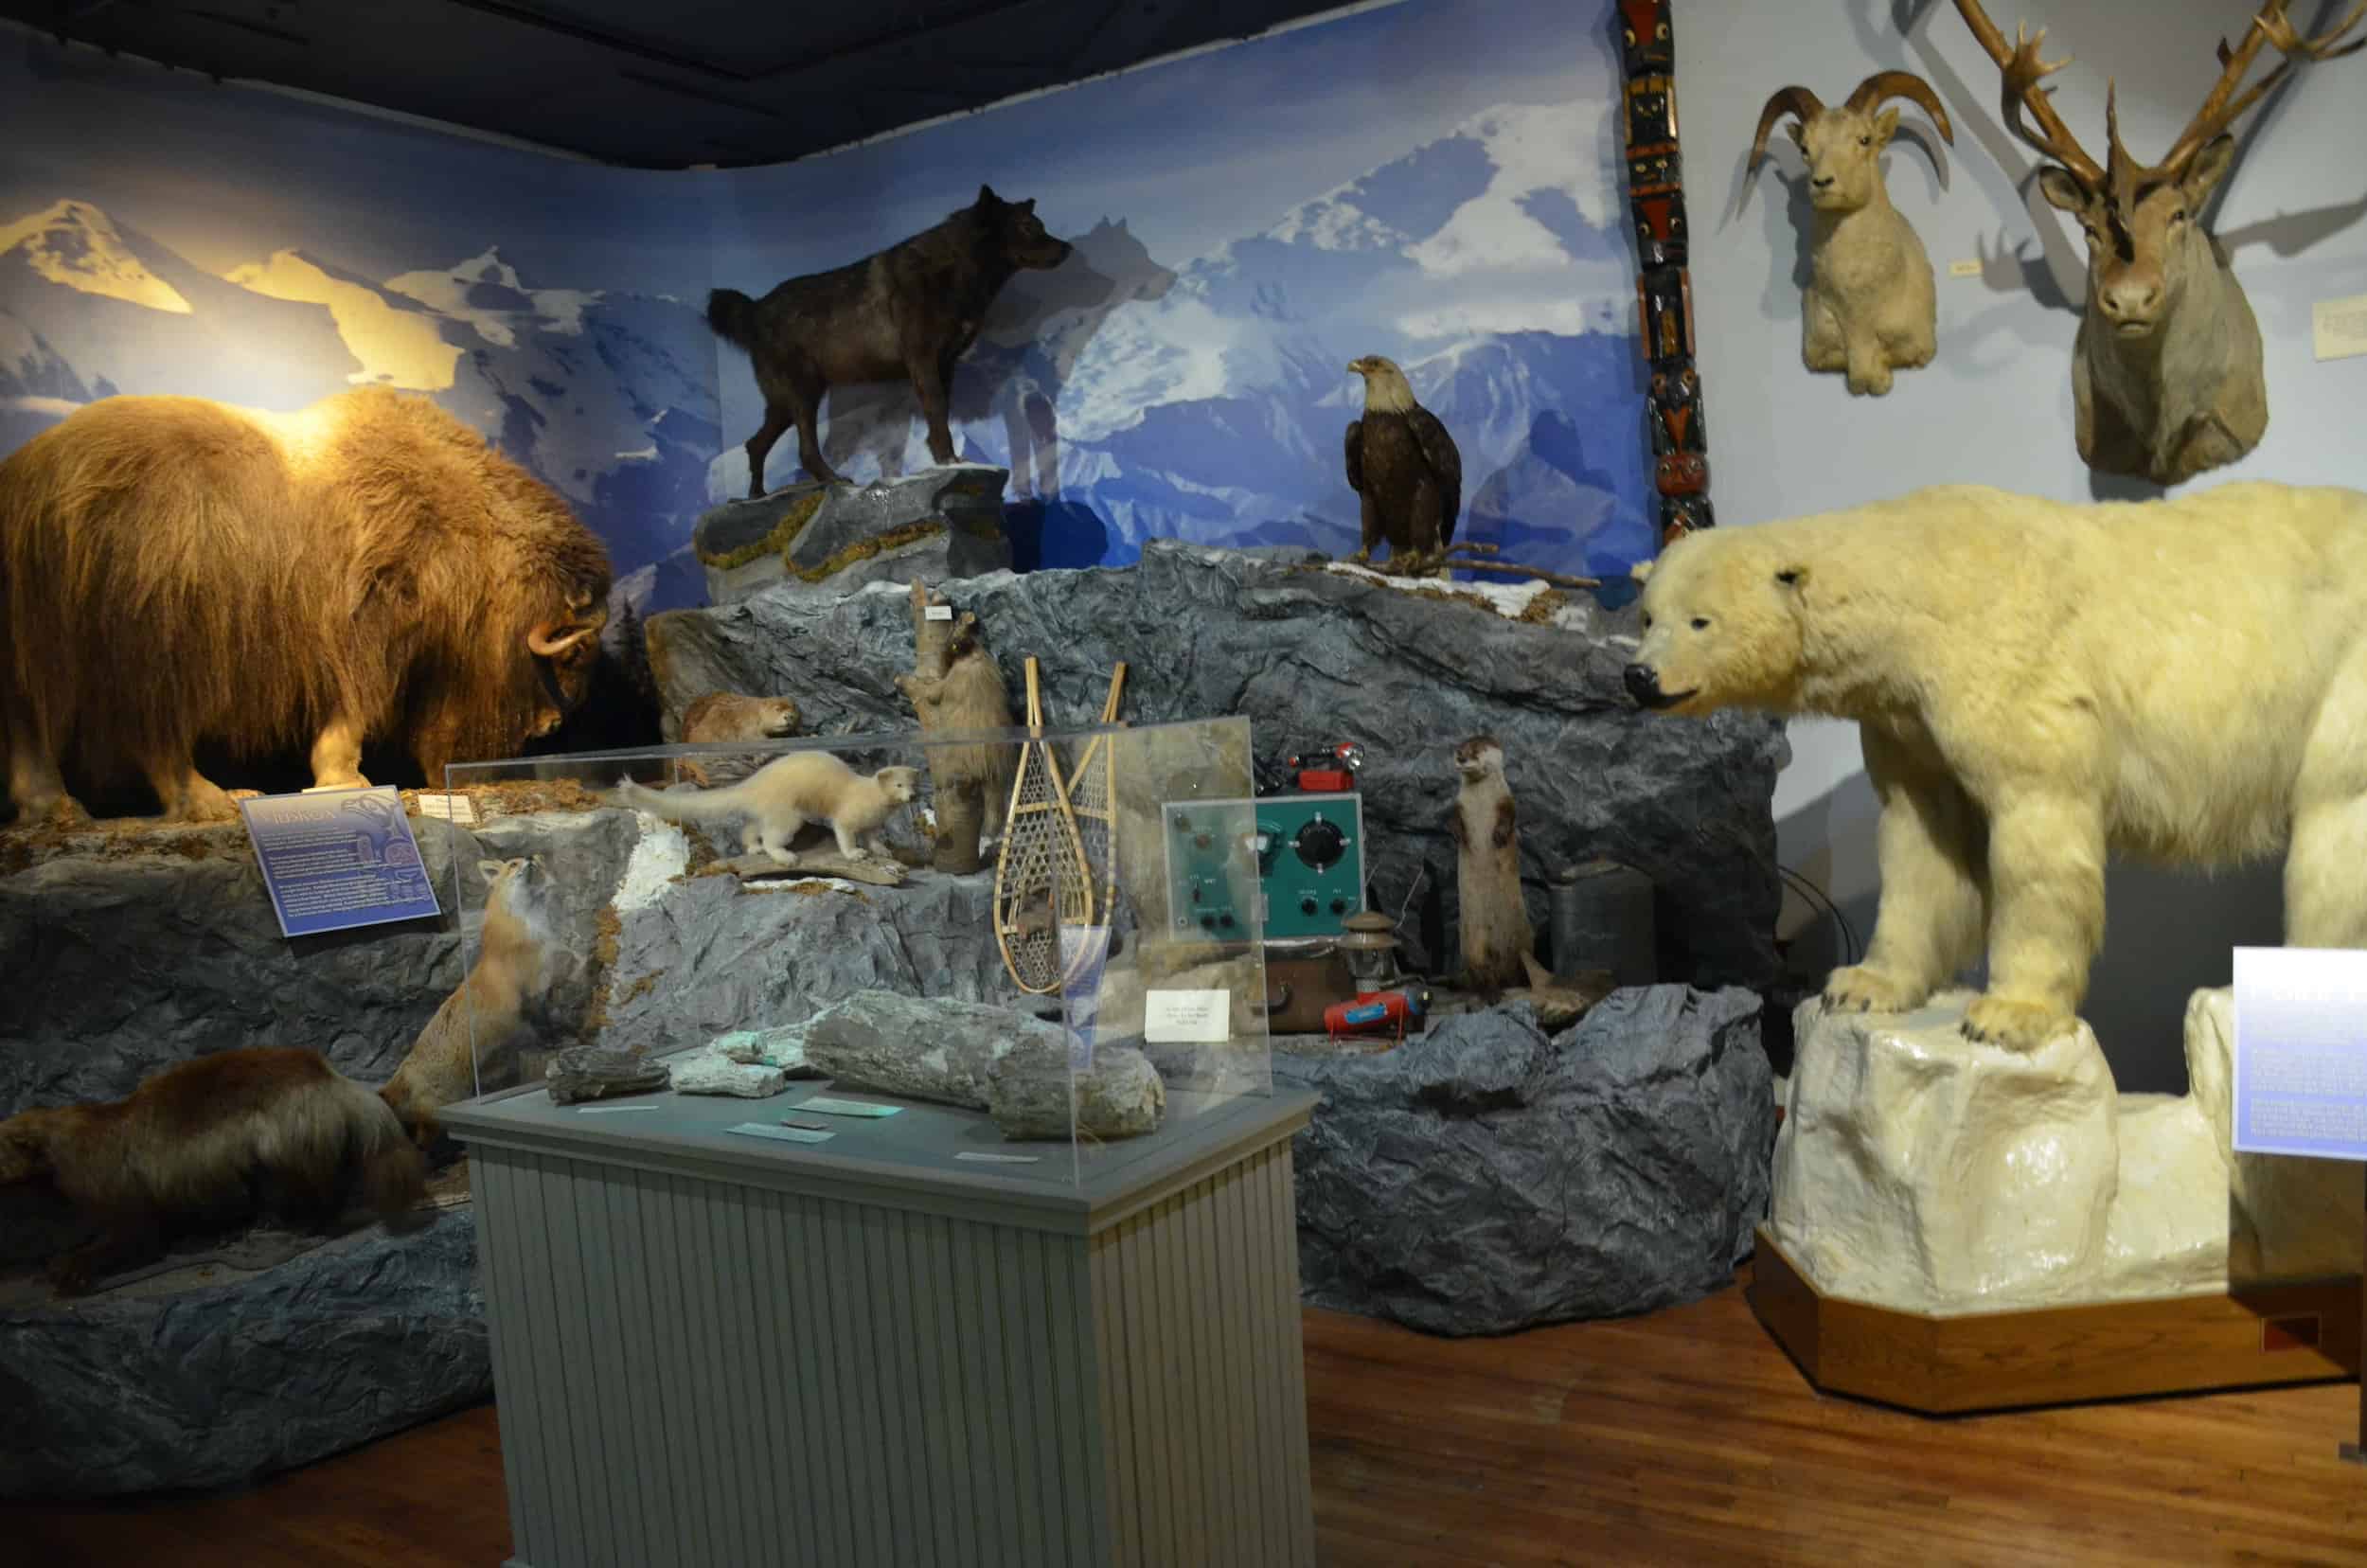 Animals from the polar region at the Buckhorn Museum in San Antonio, Texas